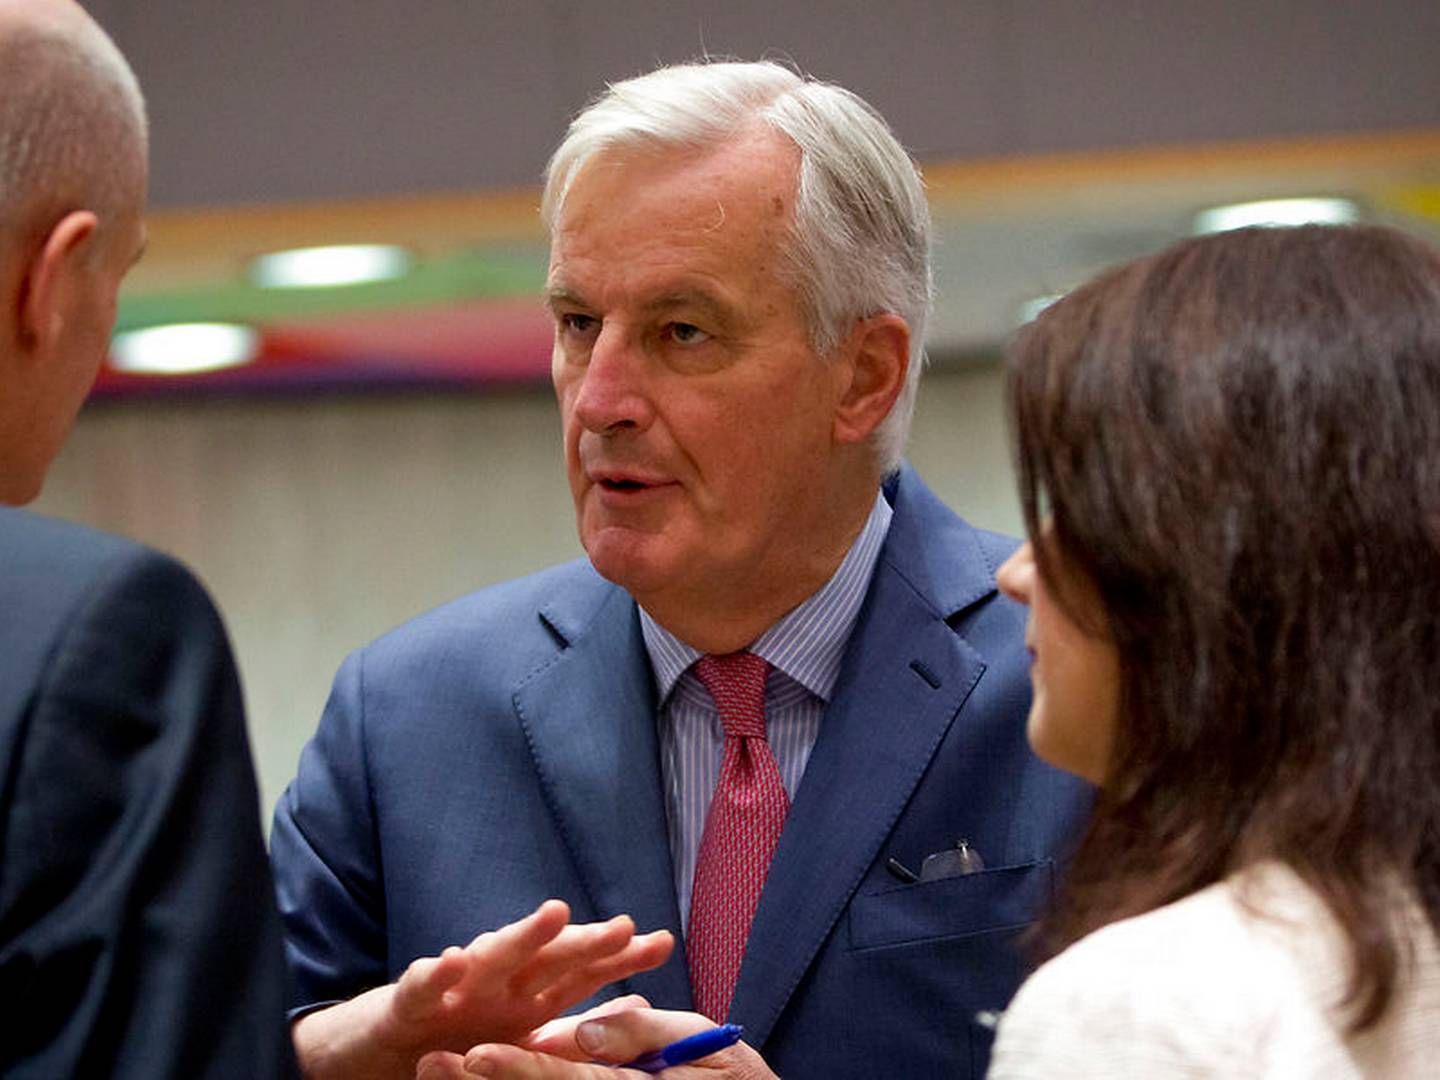 Michel Barnier, EU's chefforhandler for brexit. | Foto: Ritzau Scanpix/AP/Virginia Mayo